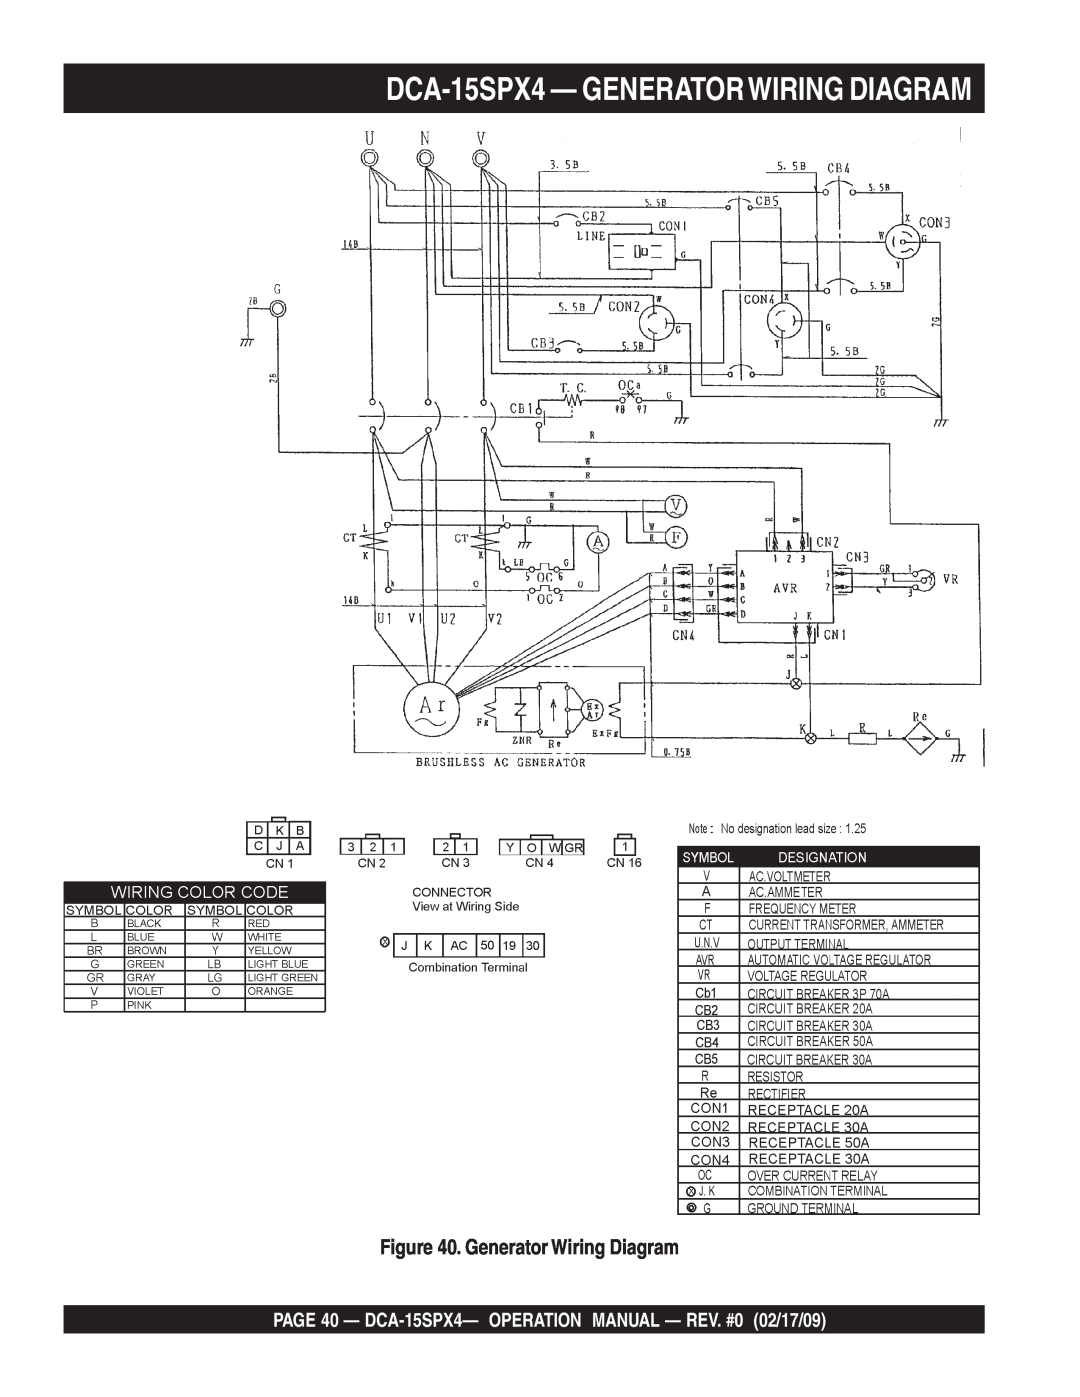 Multiquip operation manual DCA-15SPX4 - GENERATORWIRING DIAGRAM, Generator Wiring Diagram 